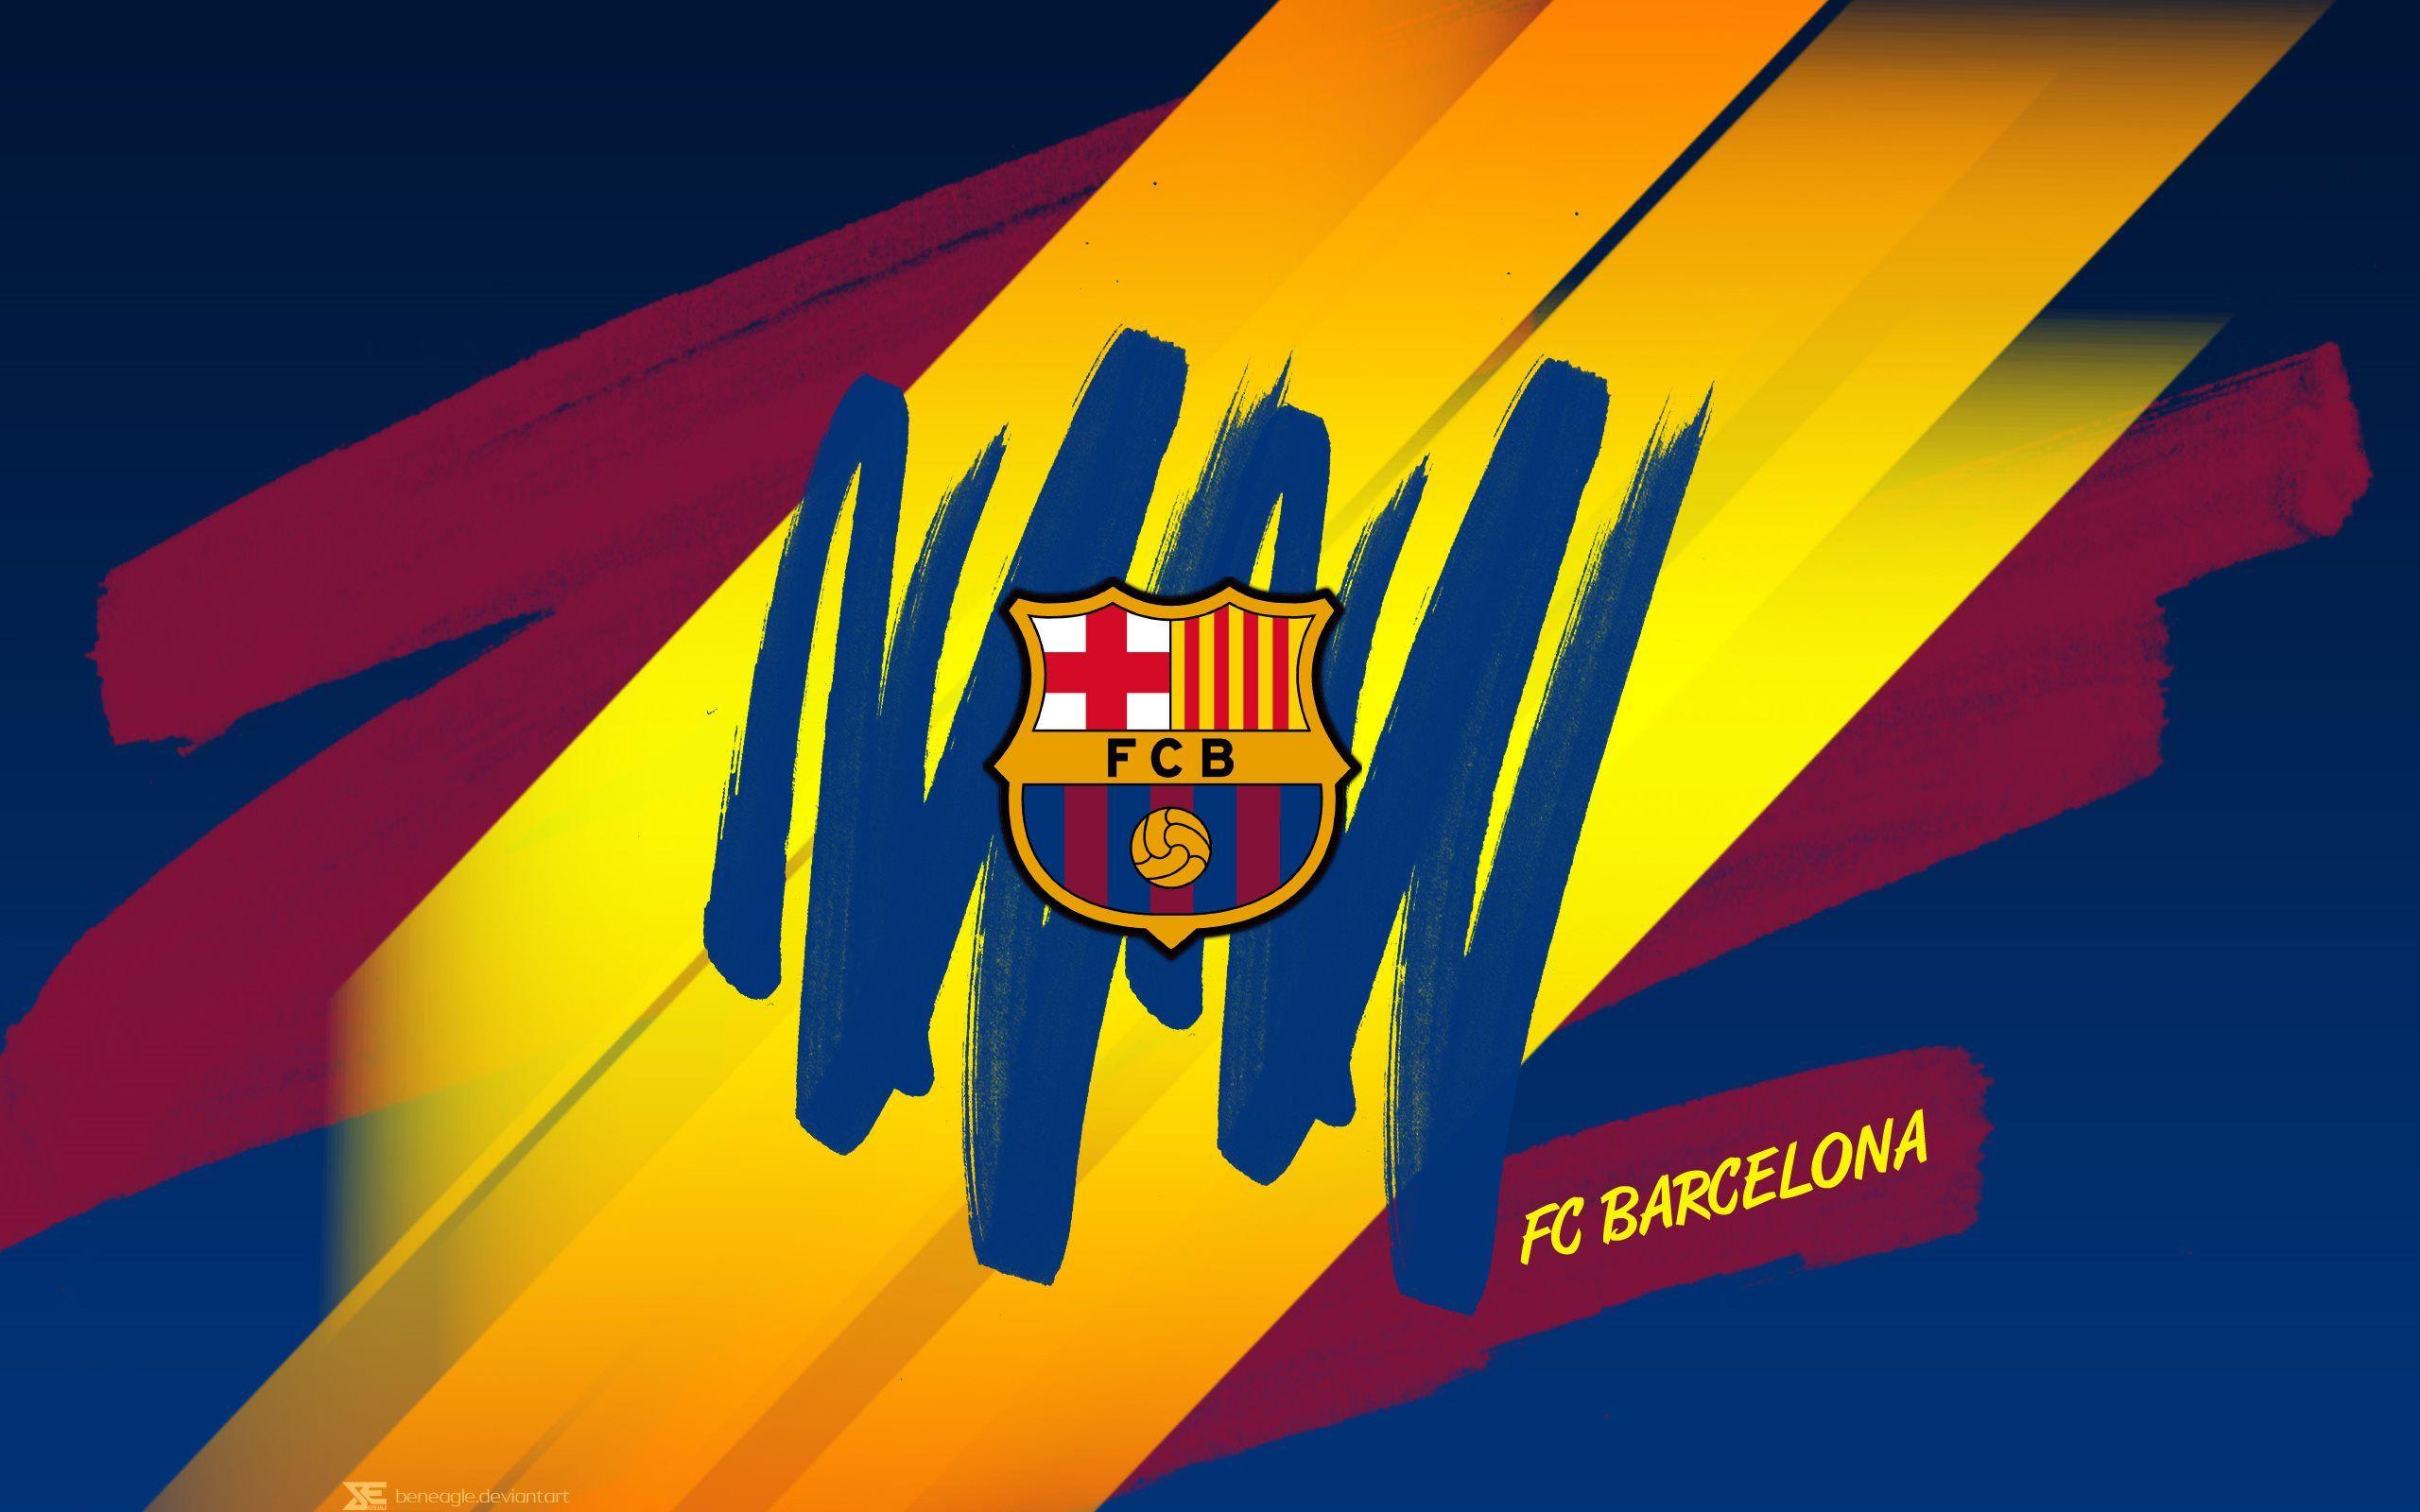 FC Barcelona  HD wallpapers 1920x1080 4K UHD 3840x2160 desktop  backgrounds football image sports